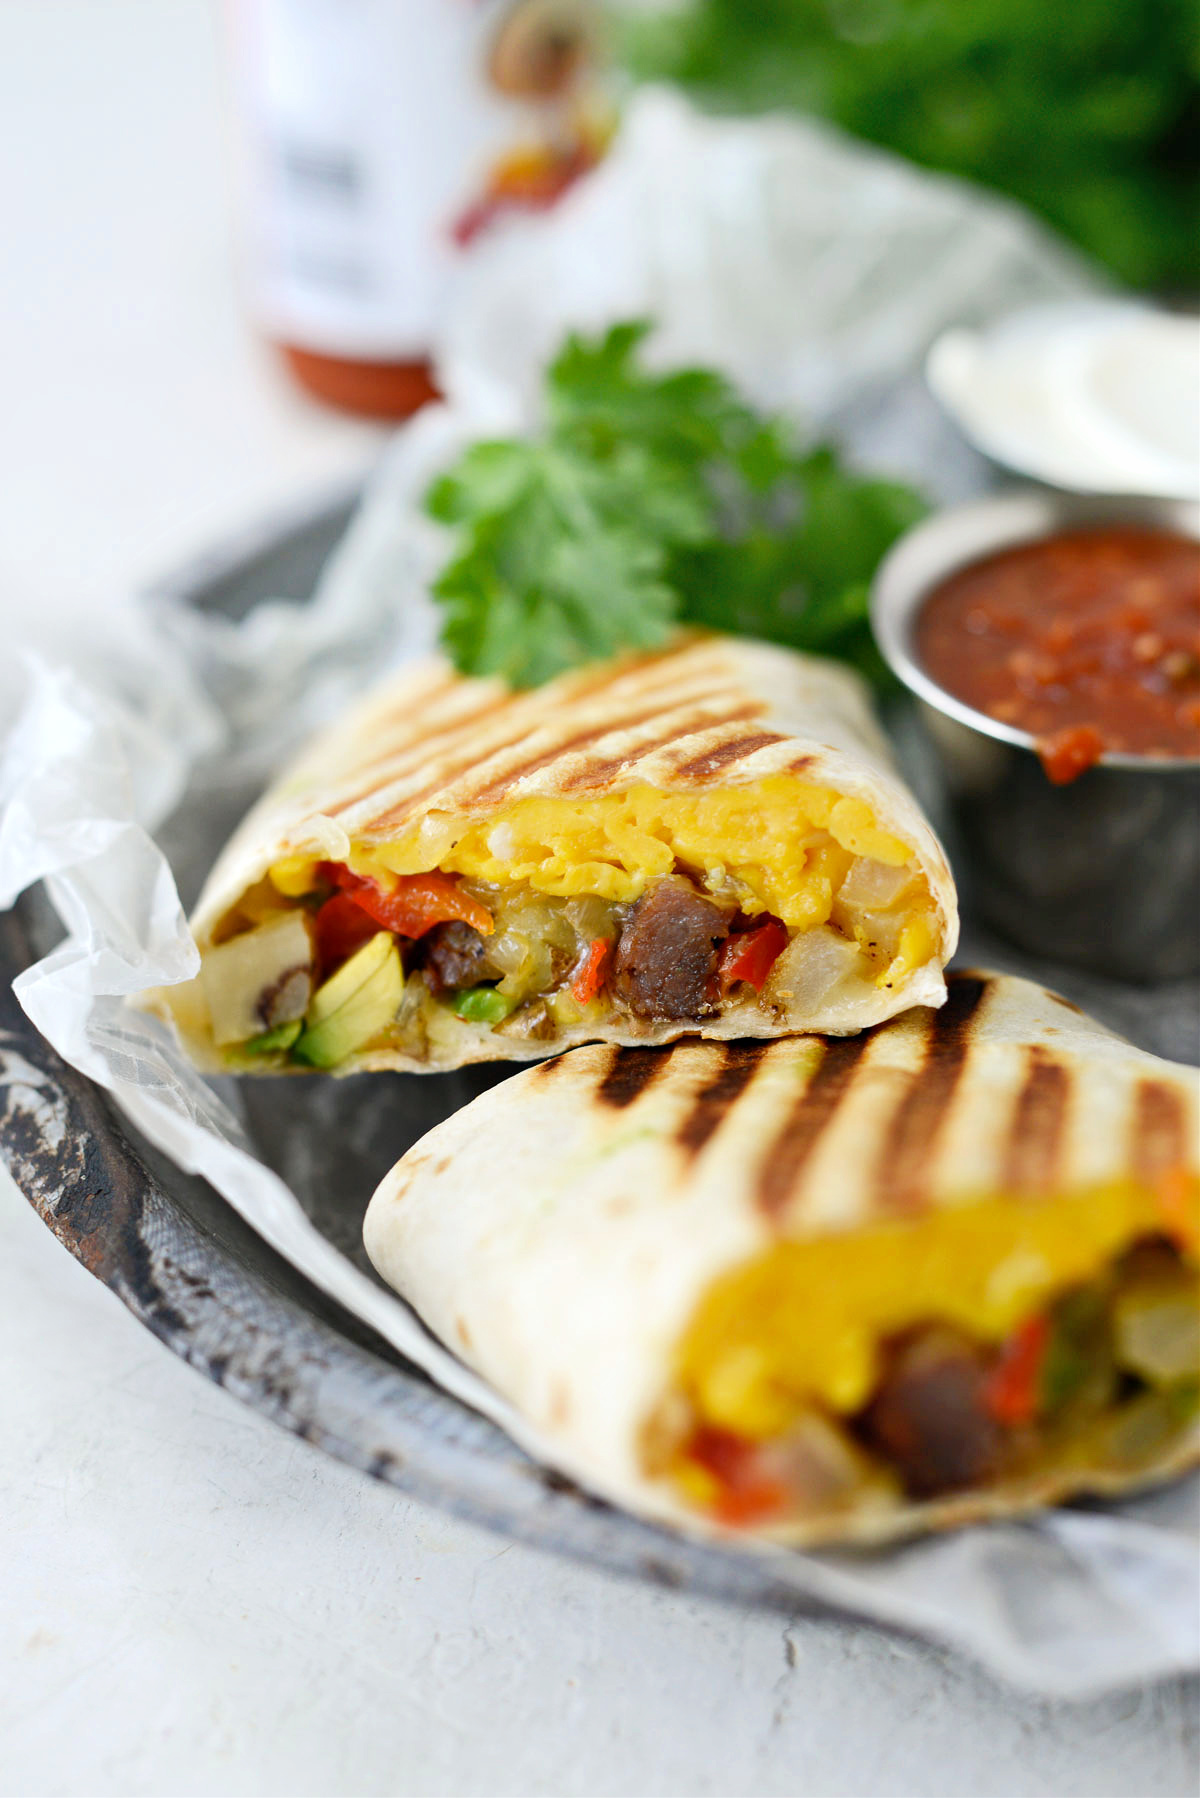 https://www.simplyscratch.com/wp-content/uploads/2021/08/Grilled-Breakfast-Burritos-l-SimplyScratch.com-23.jpg